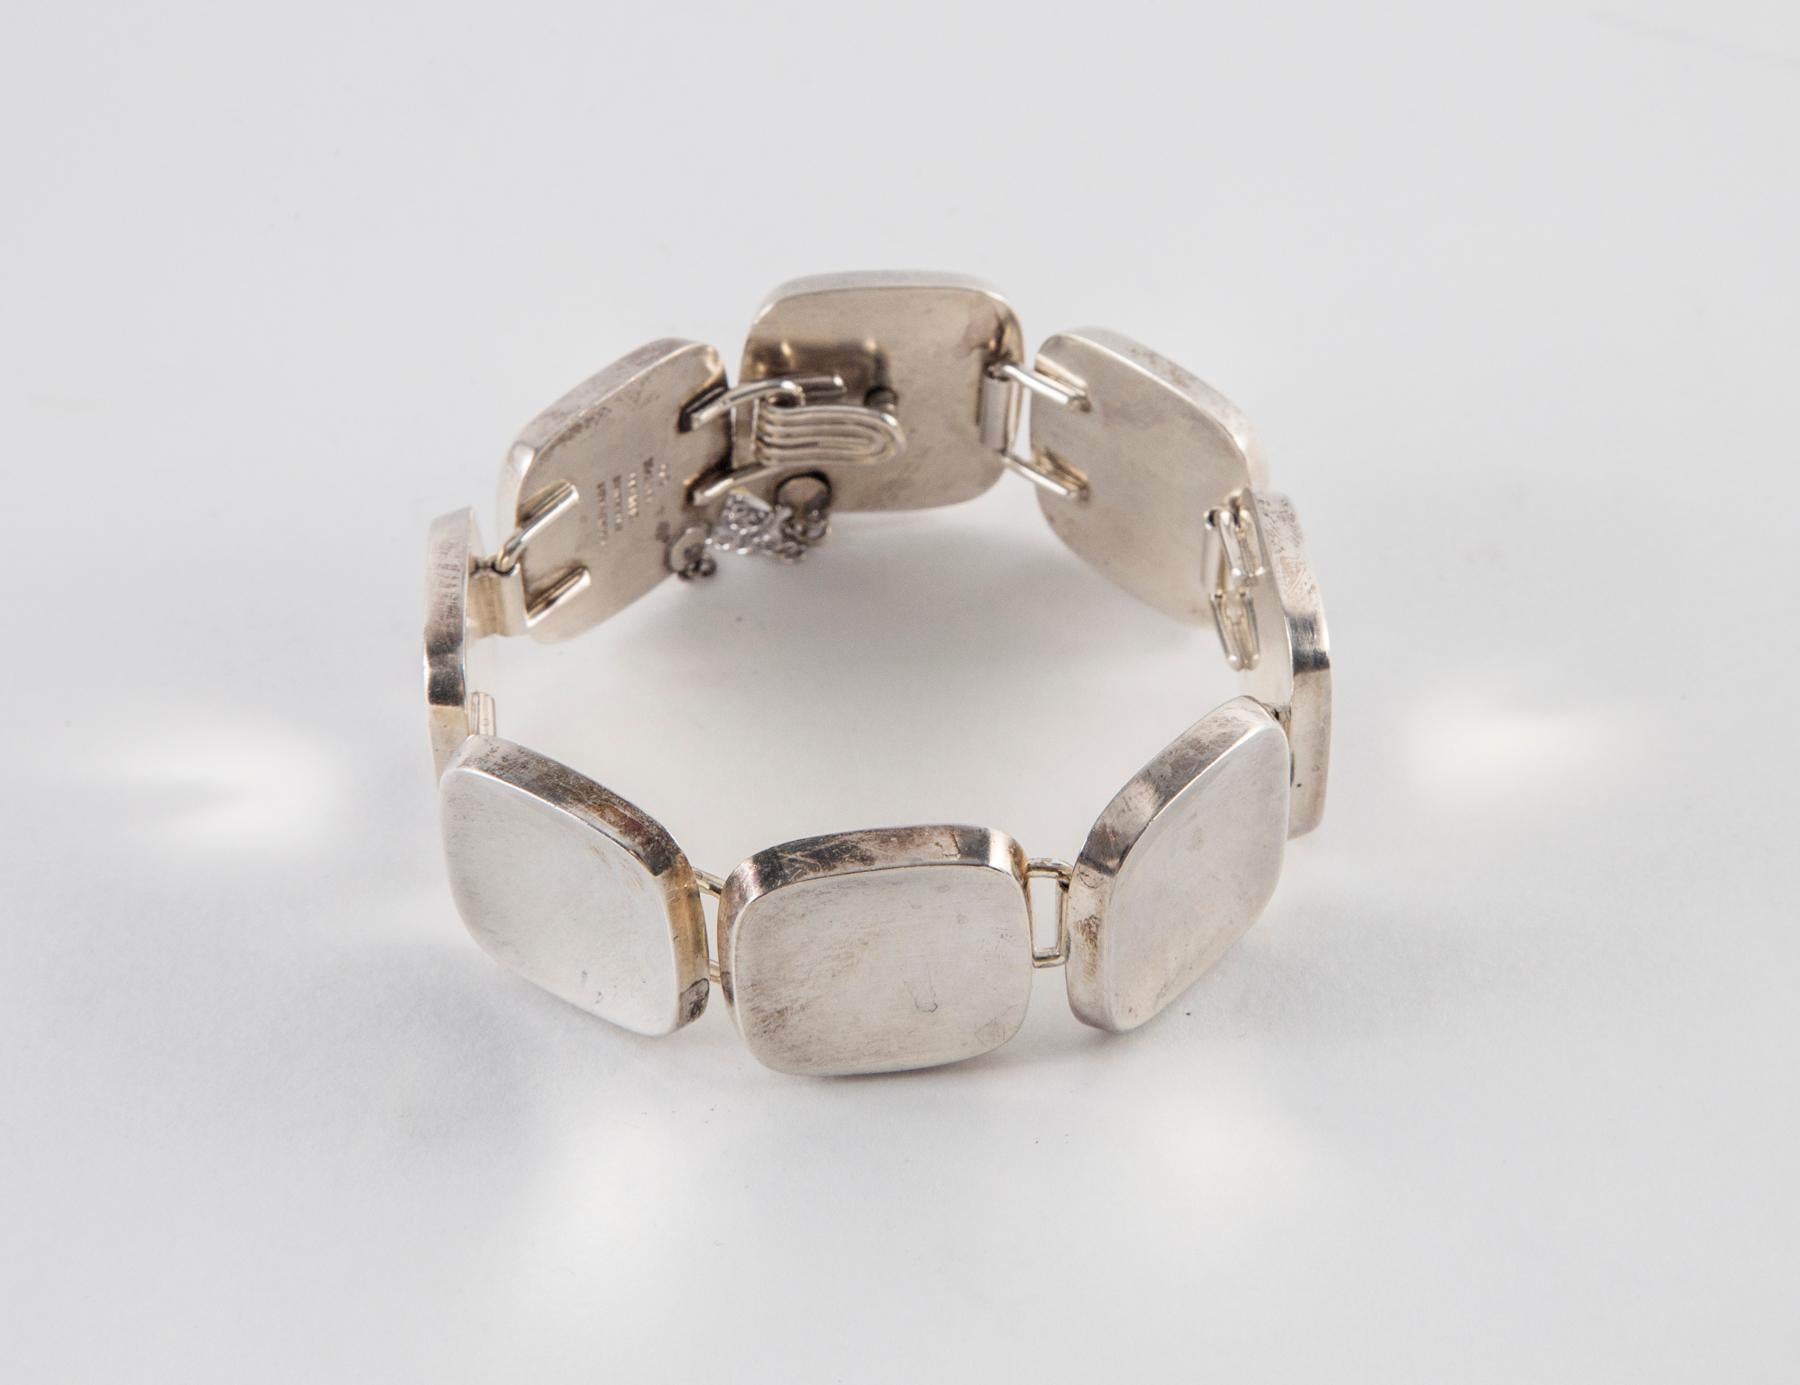 Bent Knudsen Sterling Silver Handmade Modernist Square Bracelet
Diameter: 2.5